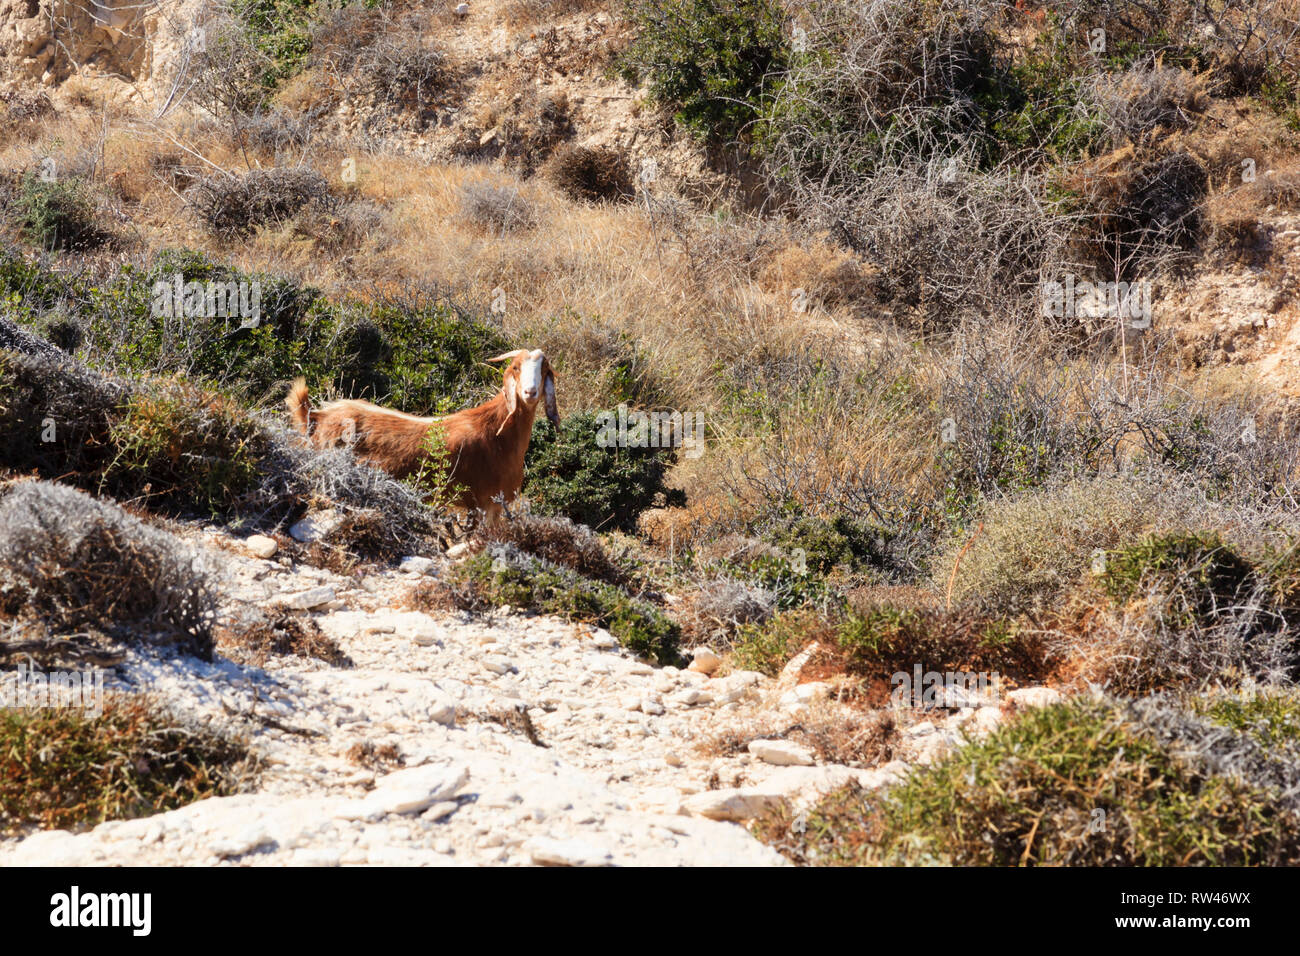 Traditional Cypriot goat grazing on scrub bondu ground, Cyprus 2010 Stock Photo